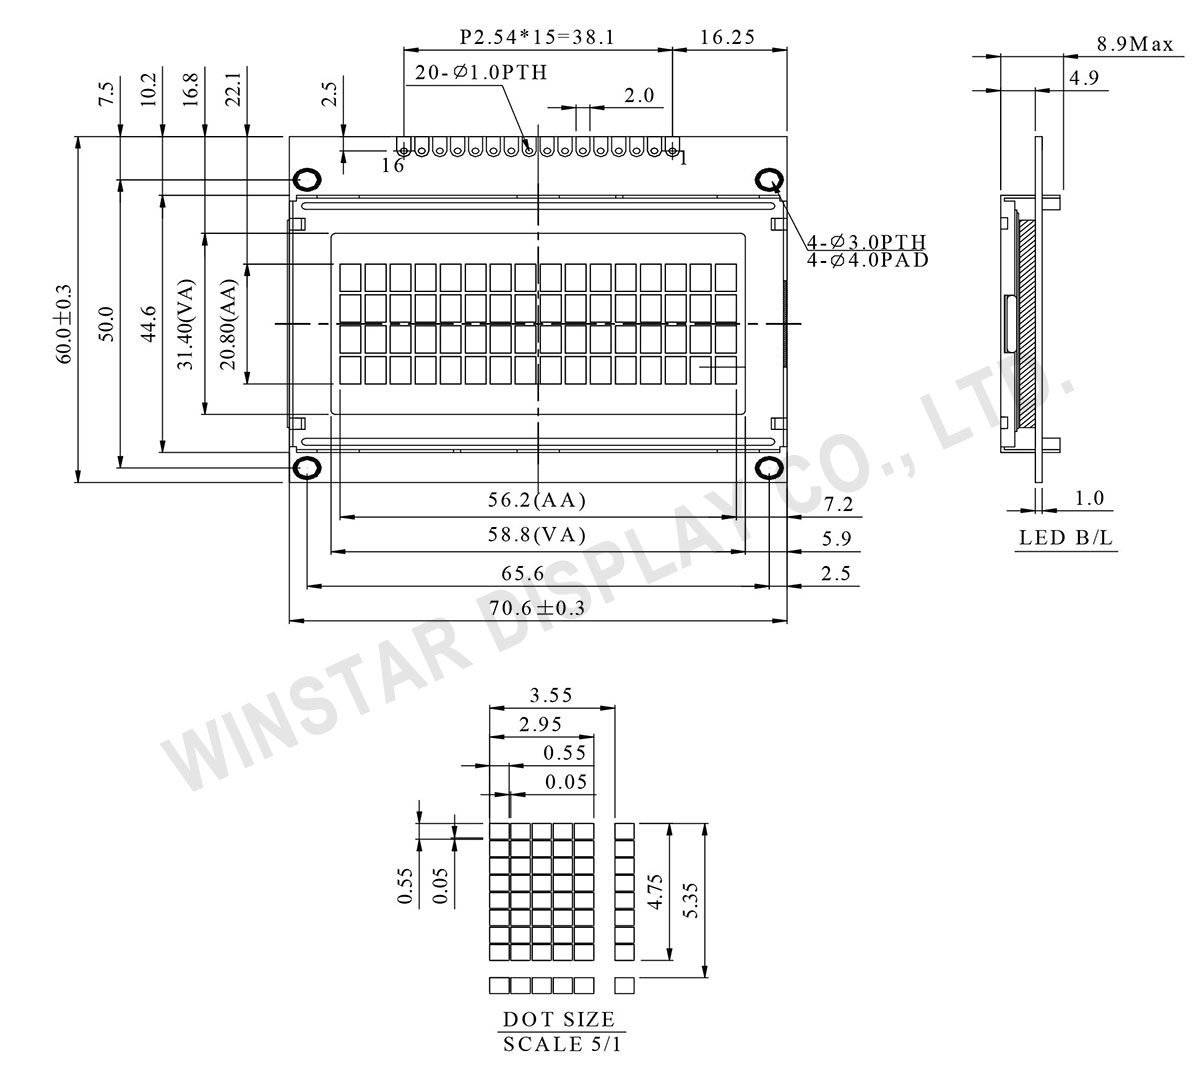 Winstar WH1604B - 16x4 Character LCD Display Module